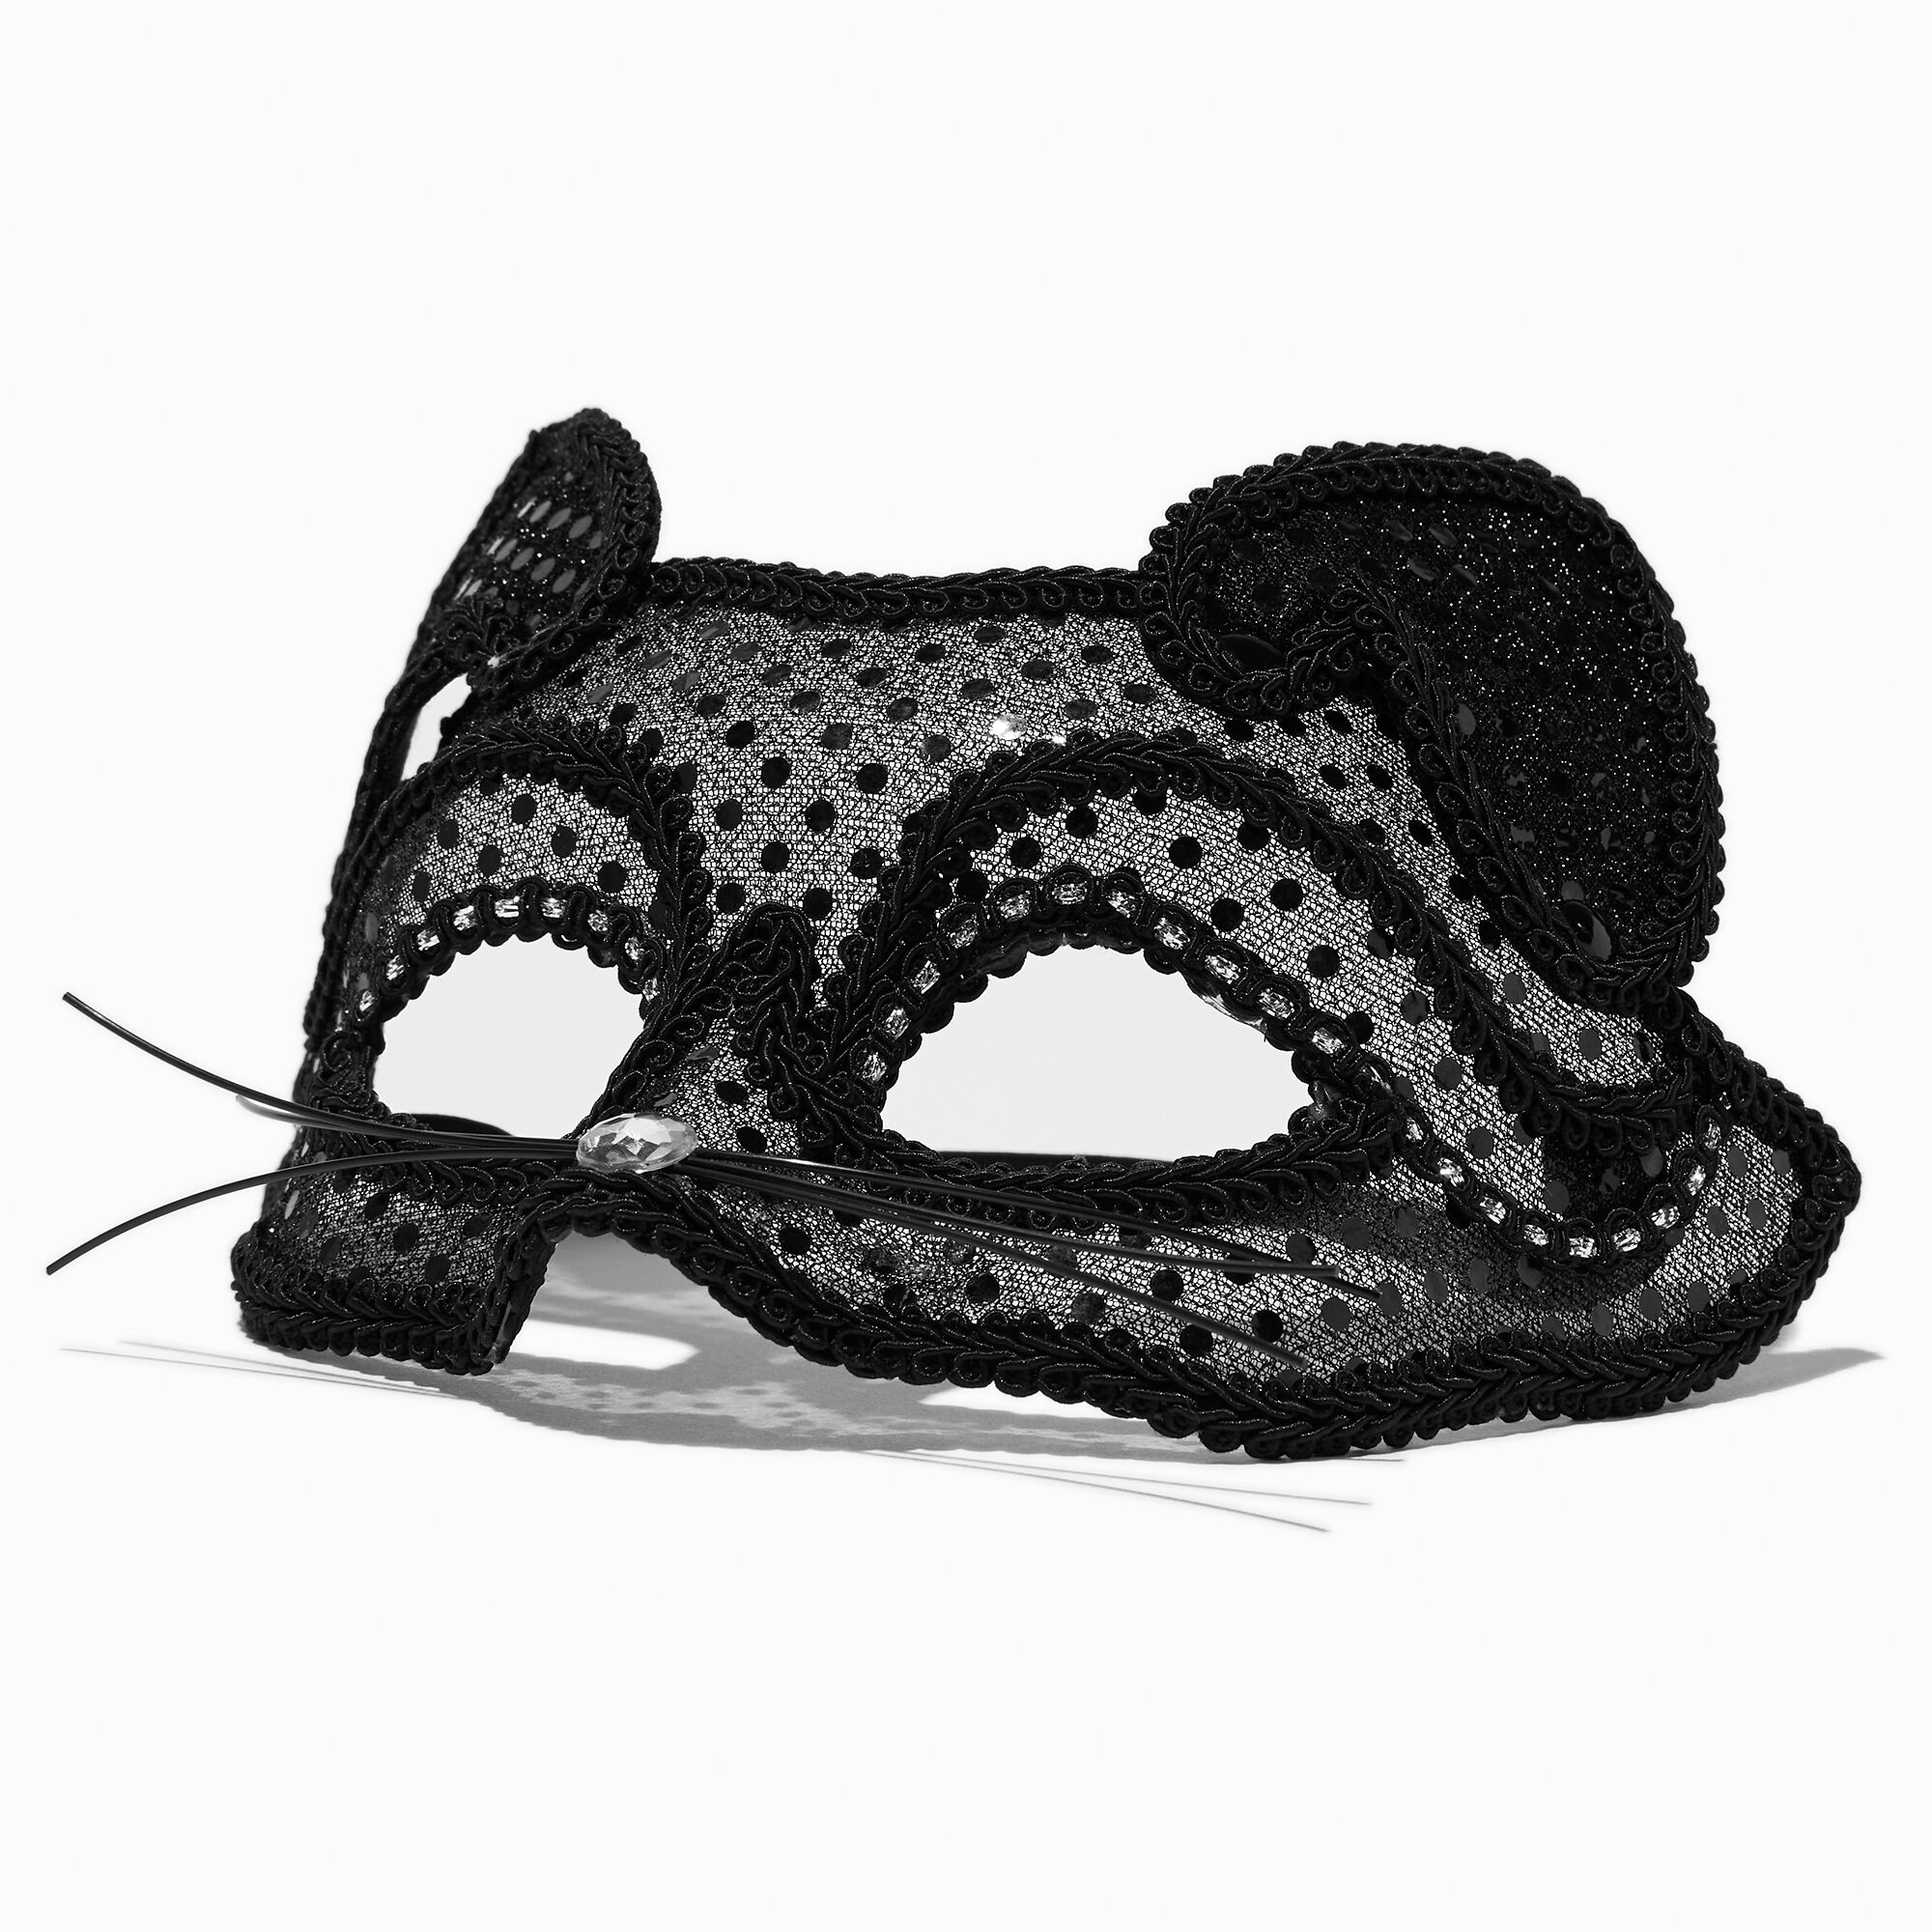 View Claires Lace Cat Mask Black information